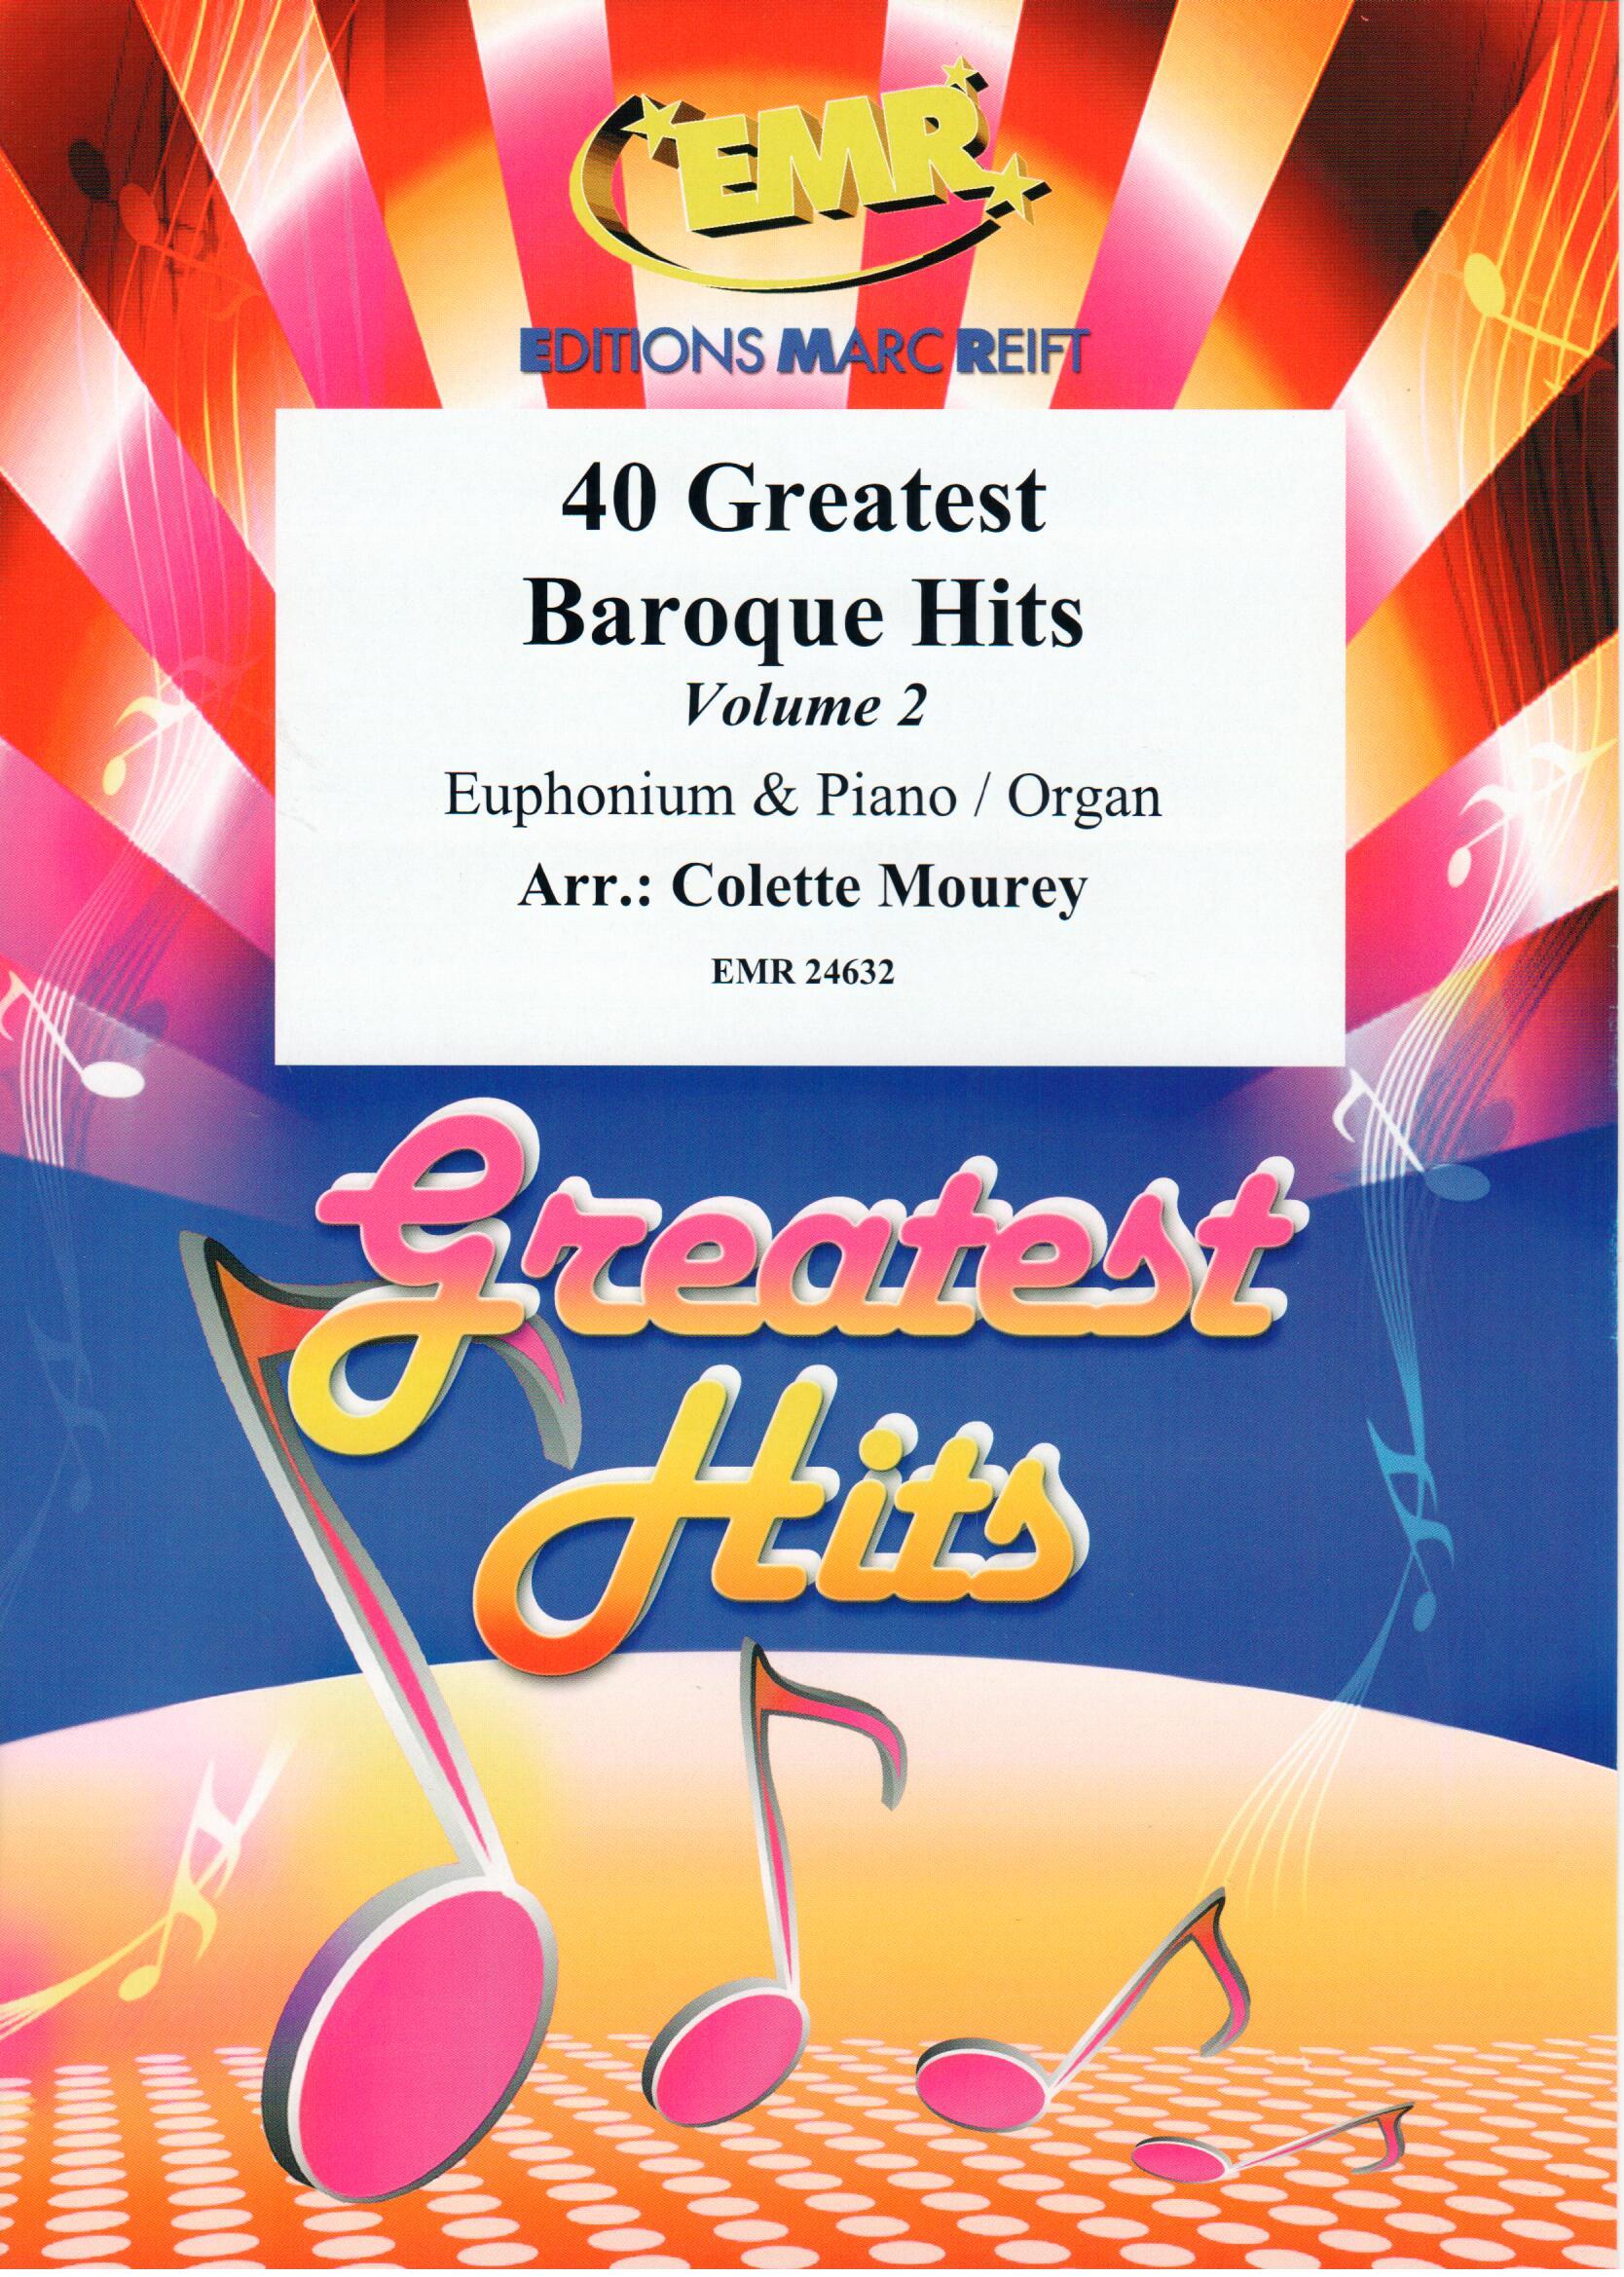 40 GREATEST BAROQUE HITS VOLUME 2, SOLOS - Euphonium